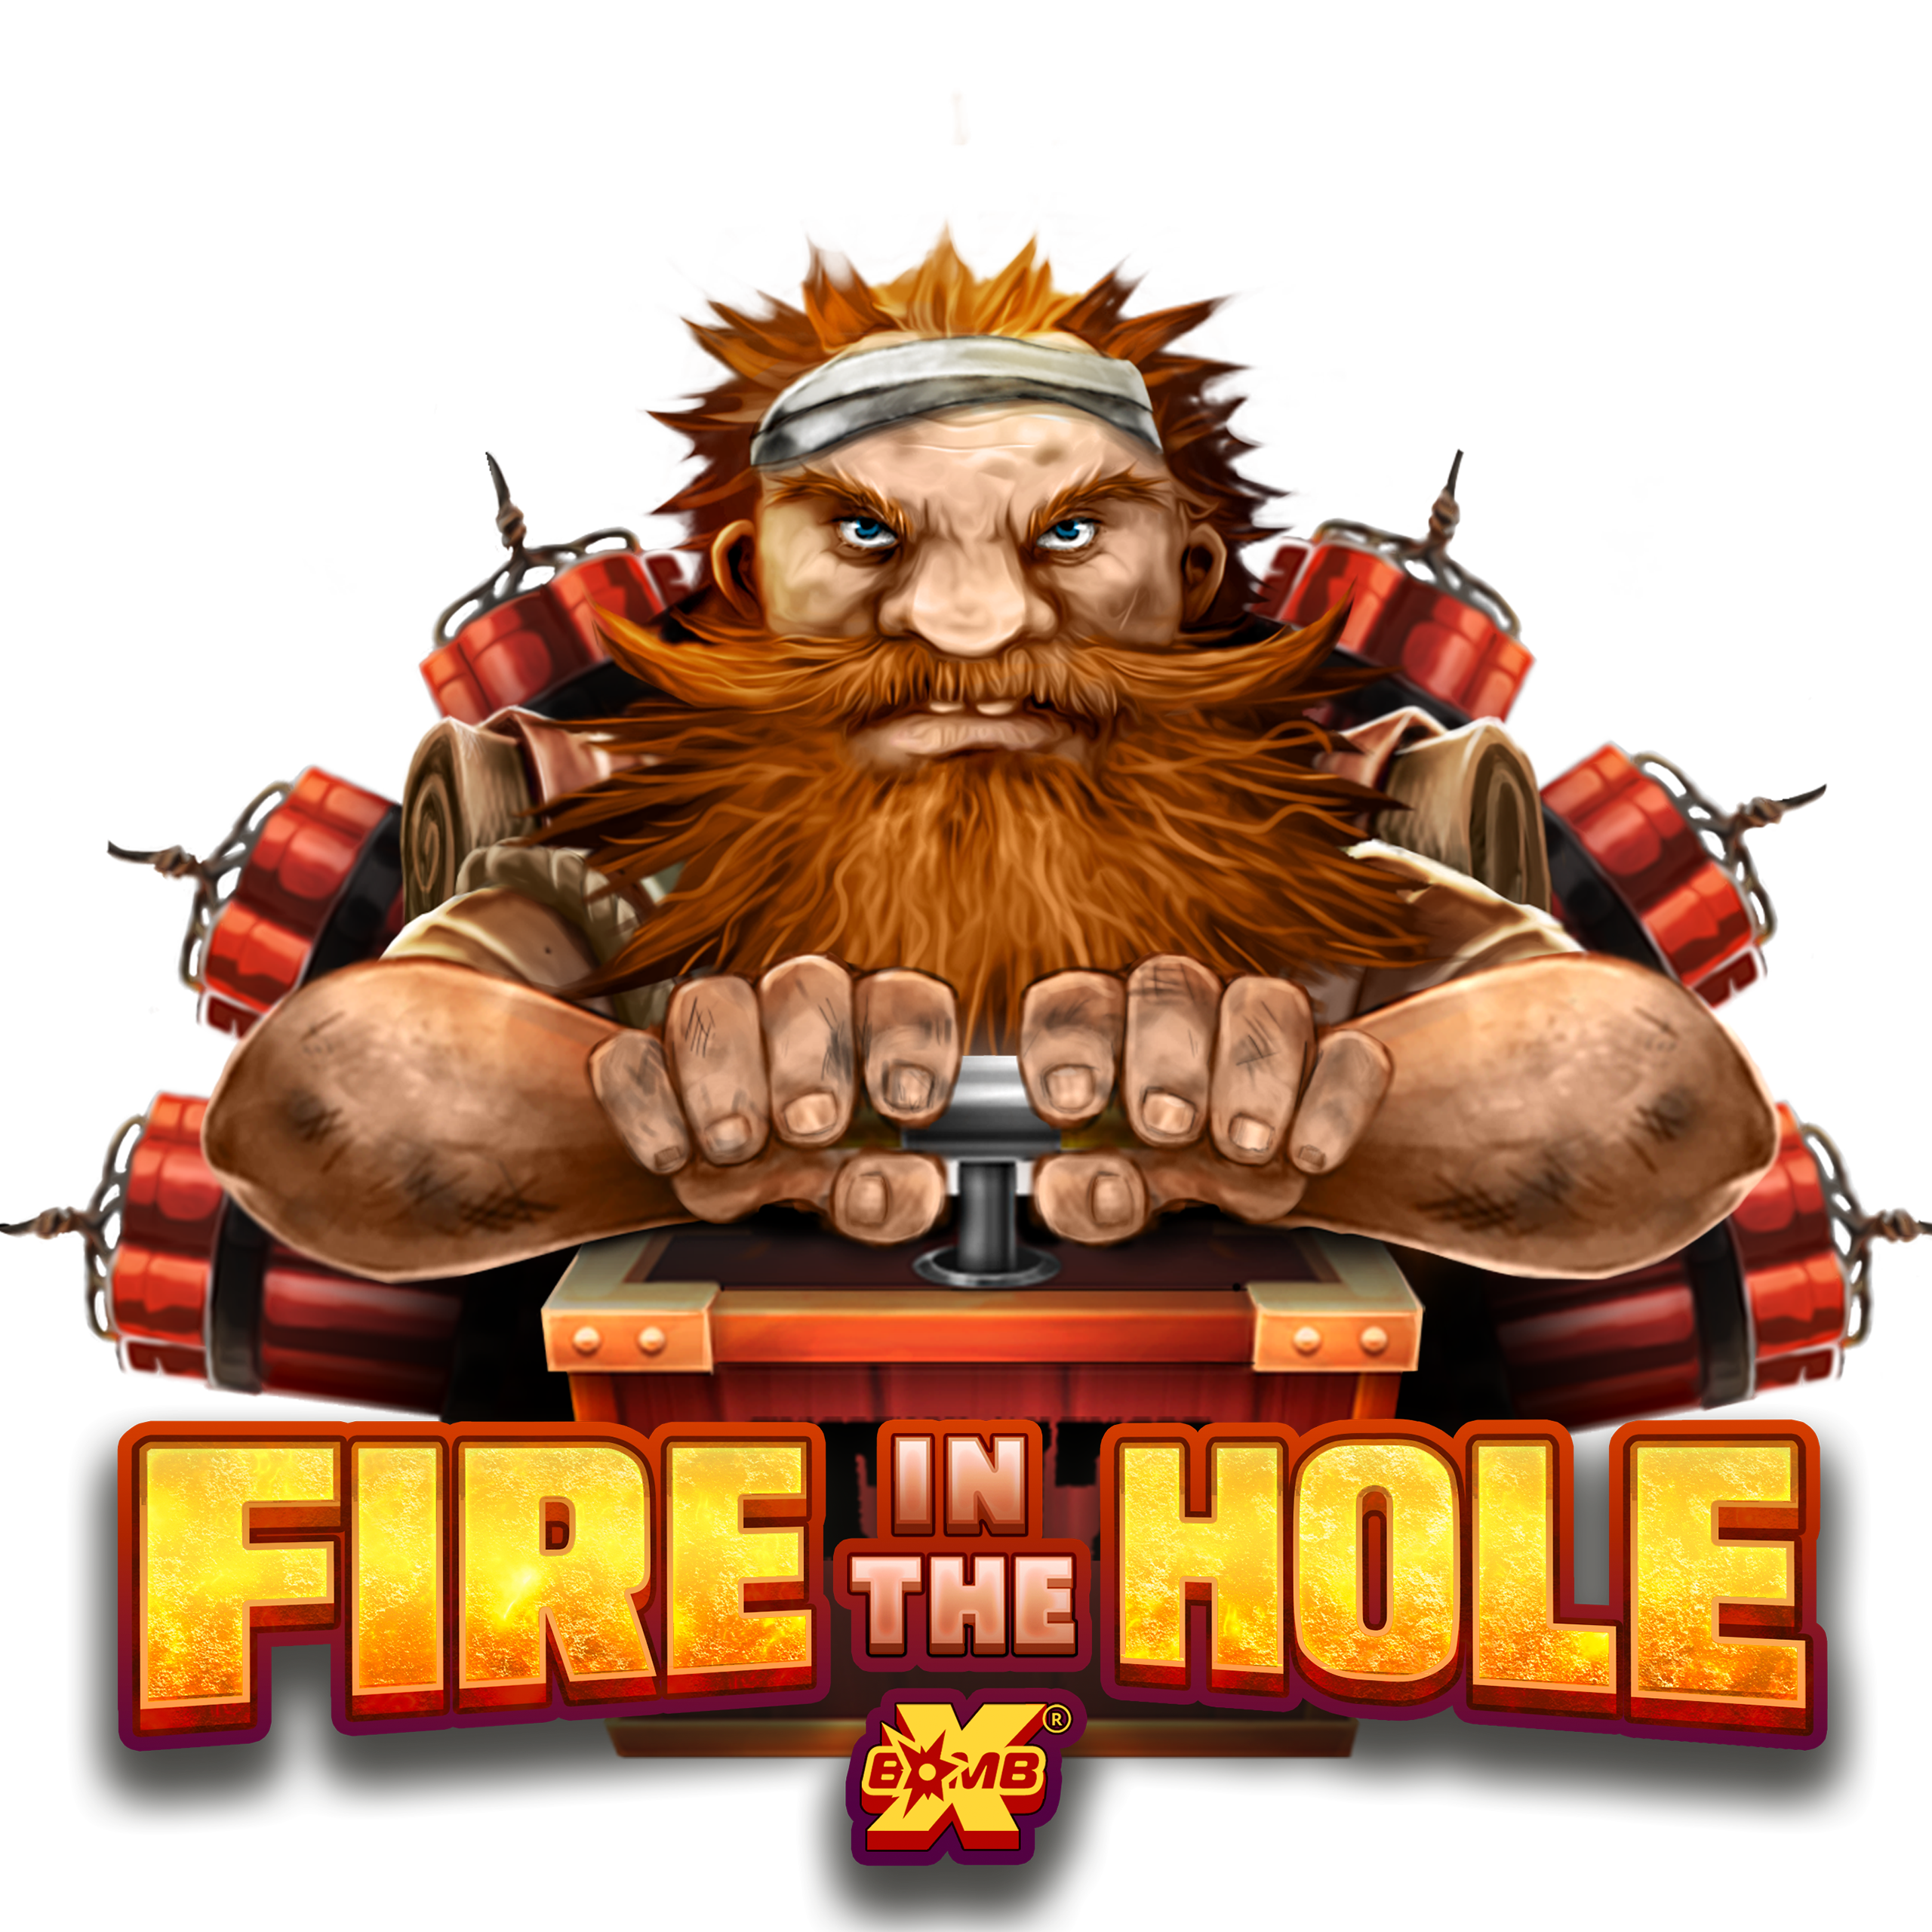 Fire on the hole